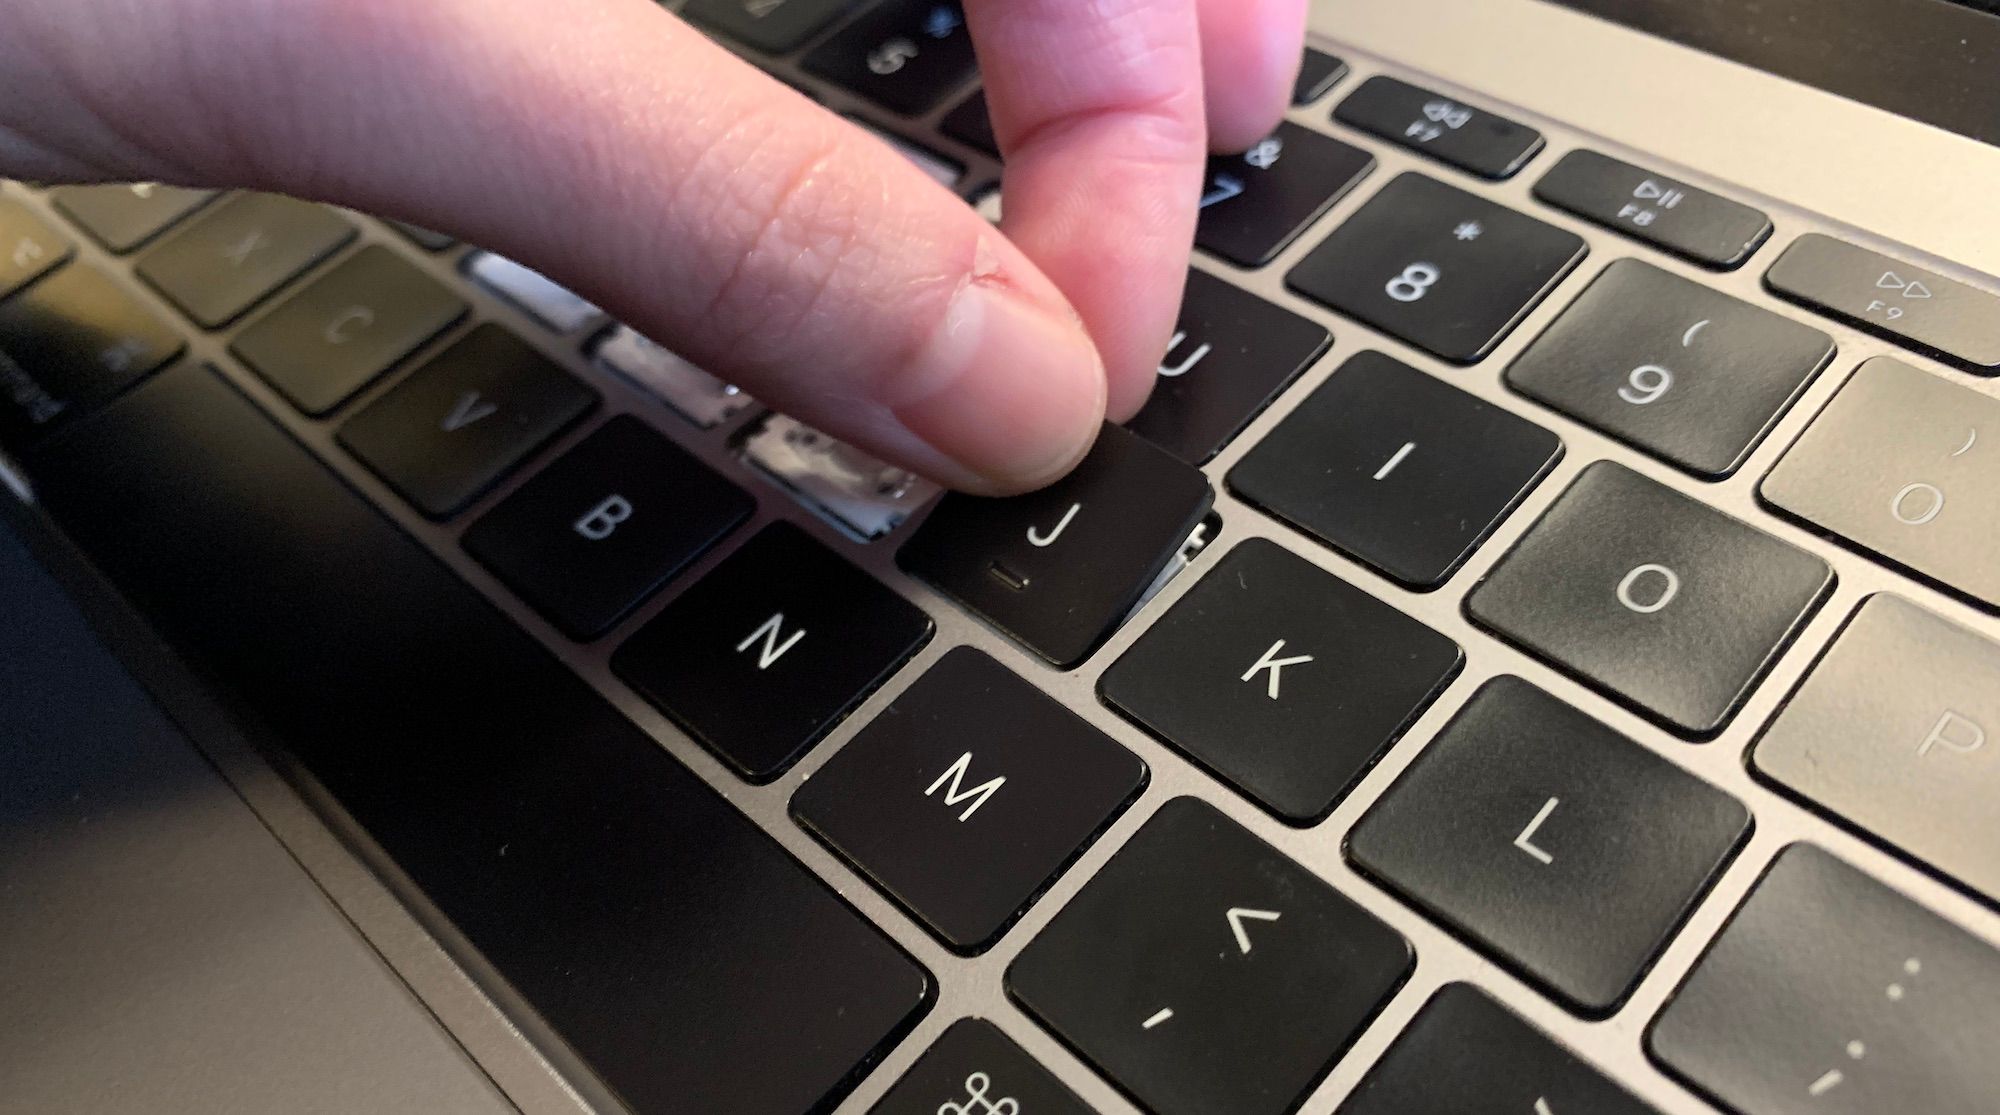 A hand re-attaching a macbook keycap in its original place